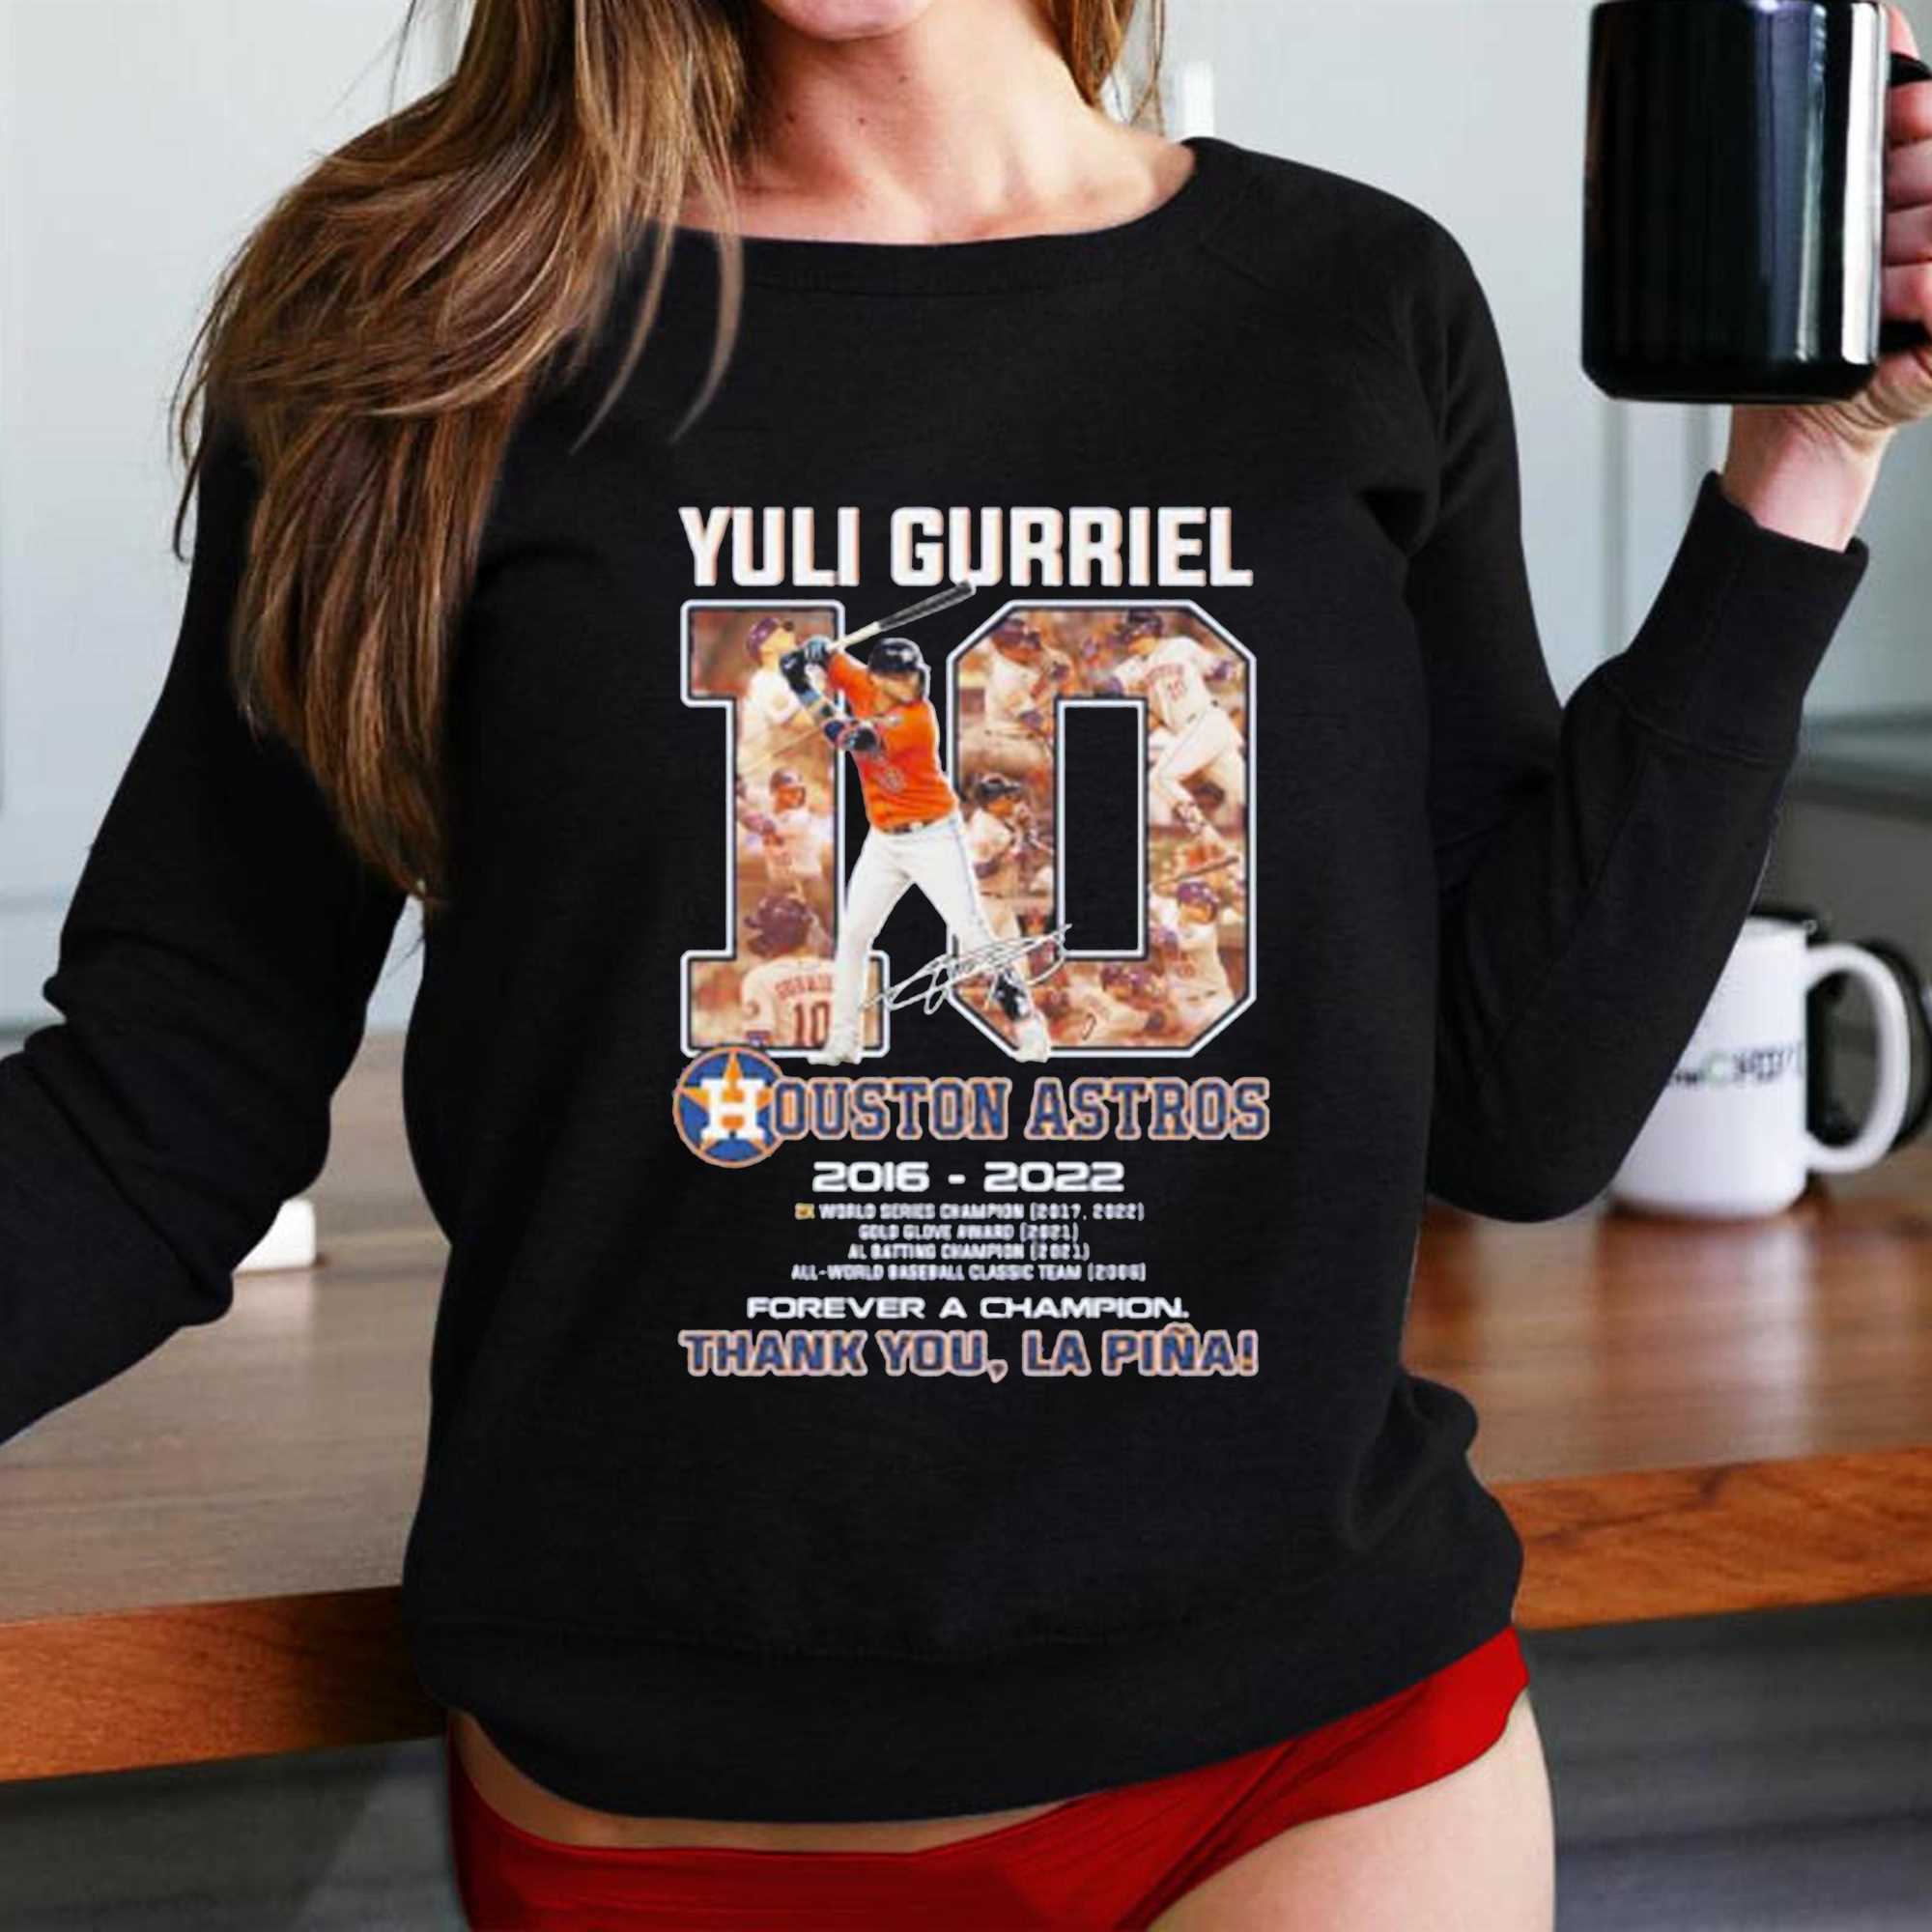 10 Yuli Gurriel Houston Astros 2016 2022 Forever A Champion Thank You Shirt  - Shibtee Clothing